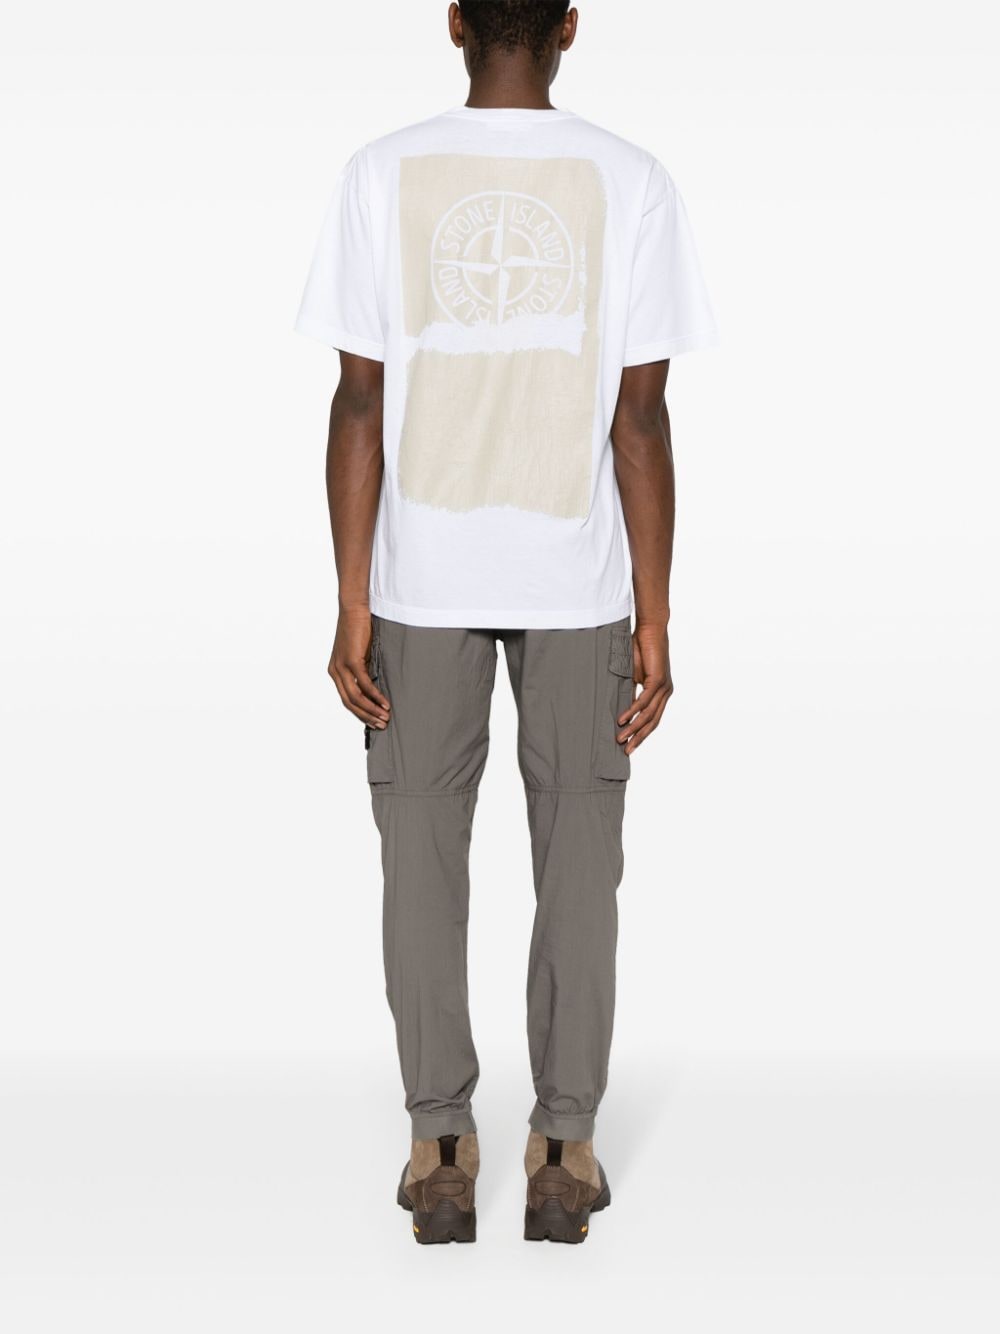 Compass-print cotton T-shirt<BR/><BR/><BR/>